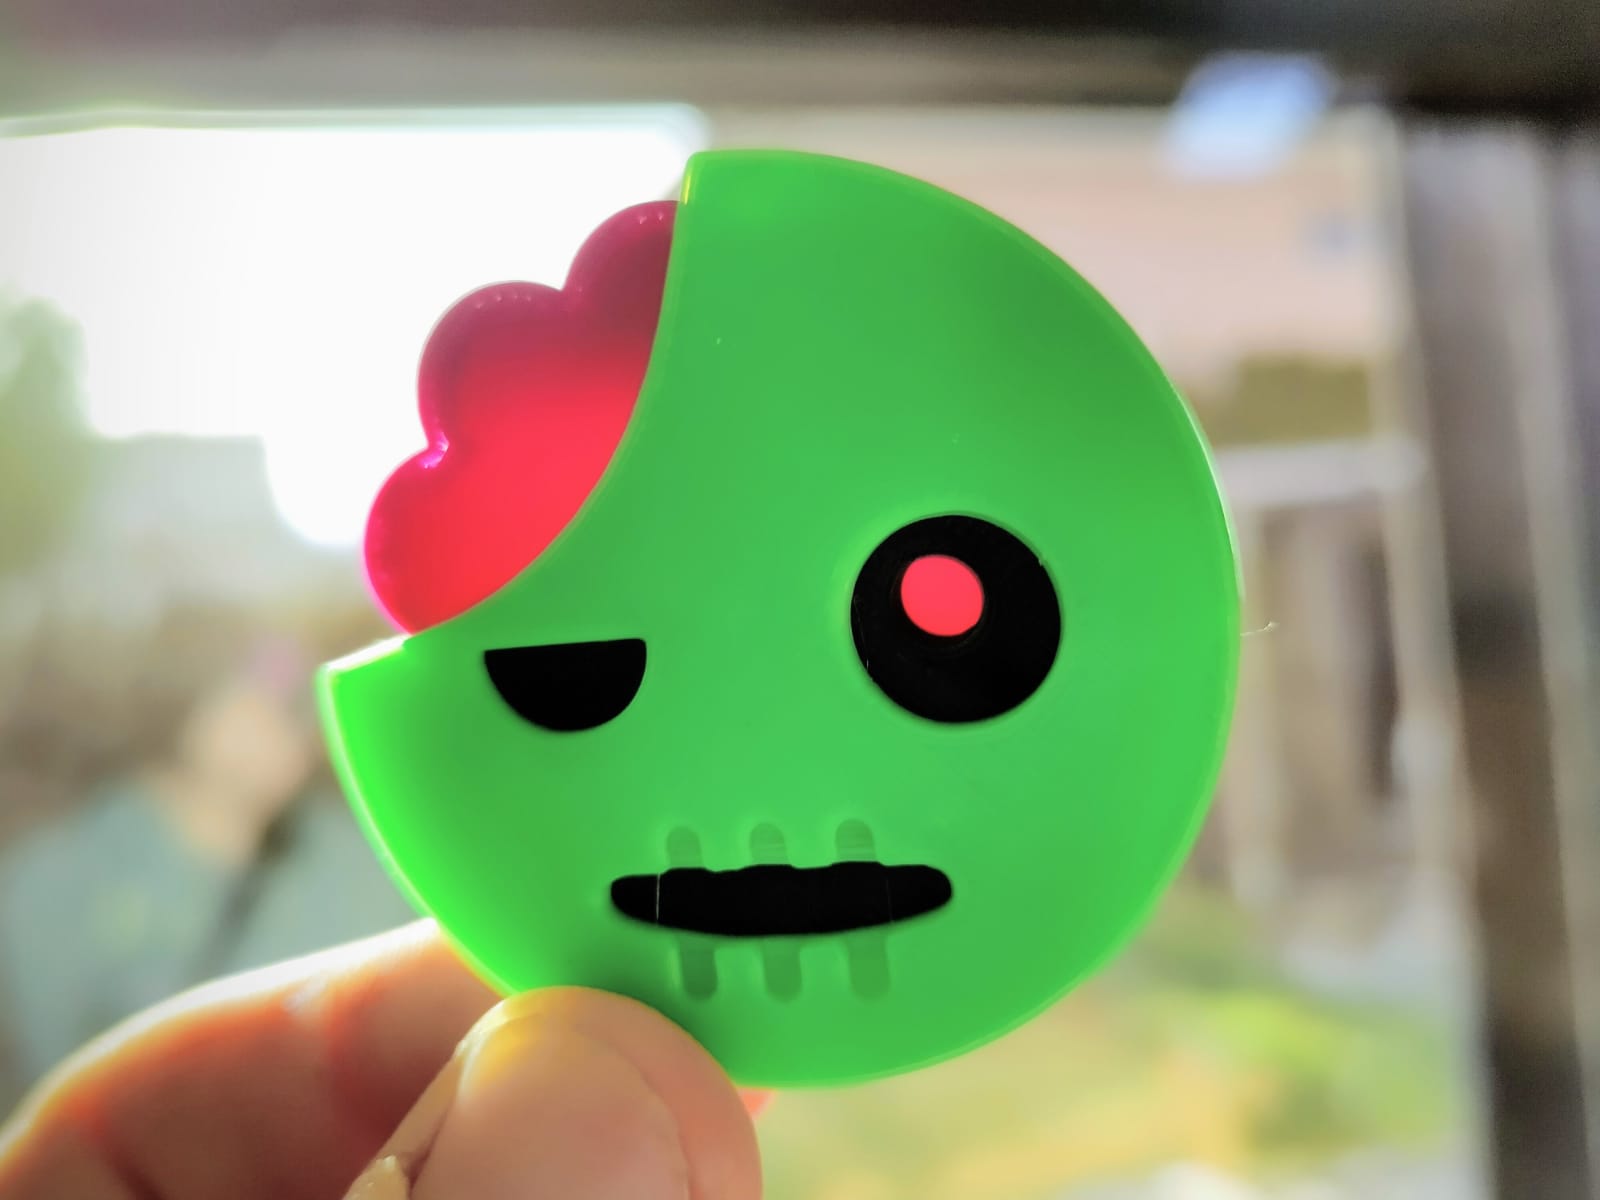 The "green zombie" emoji 3d badge